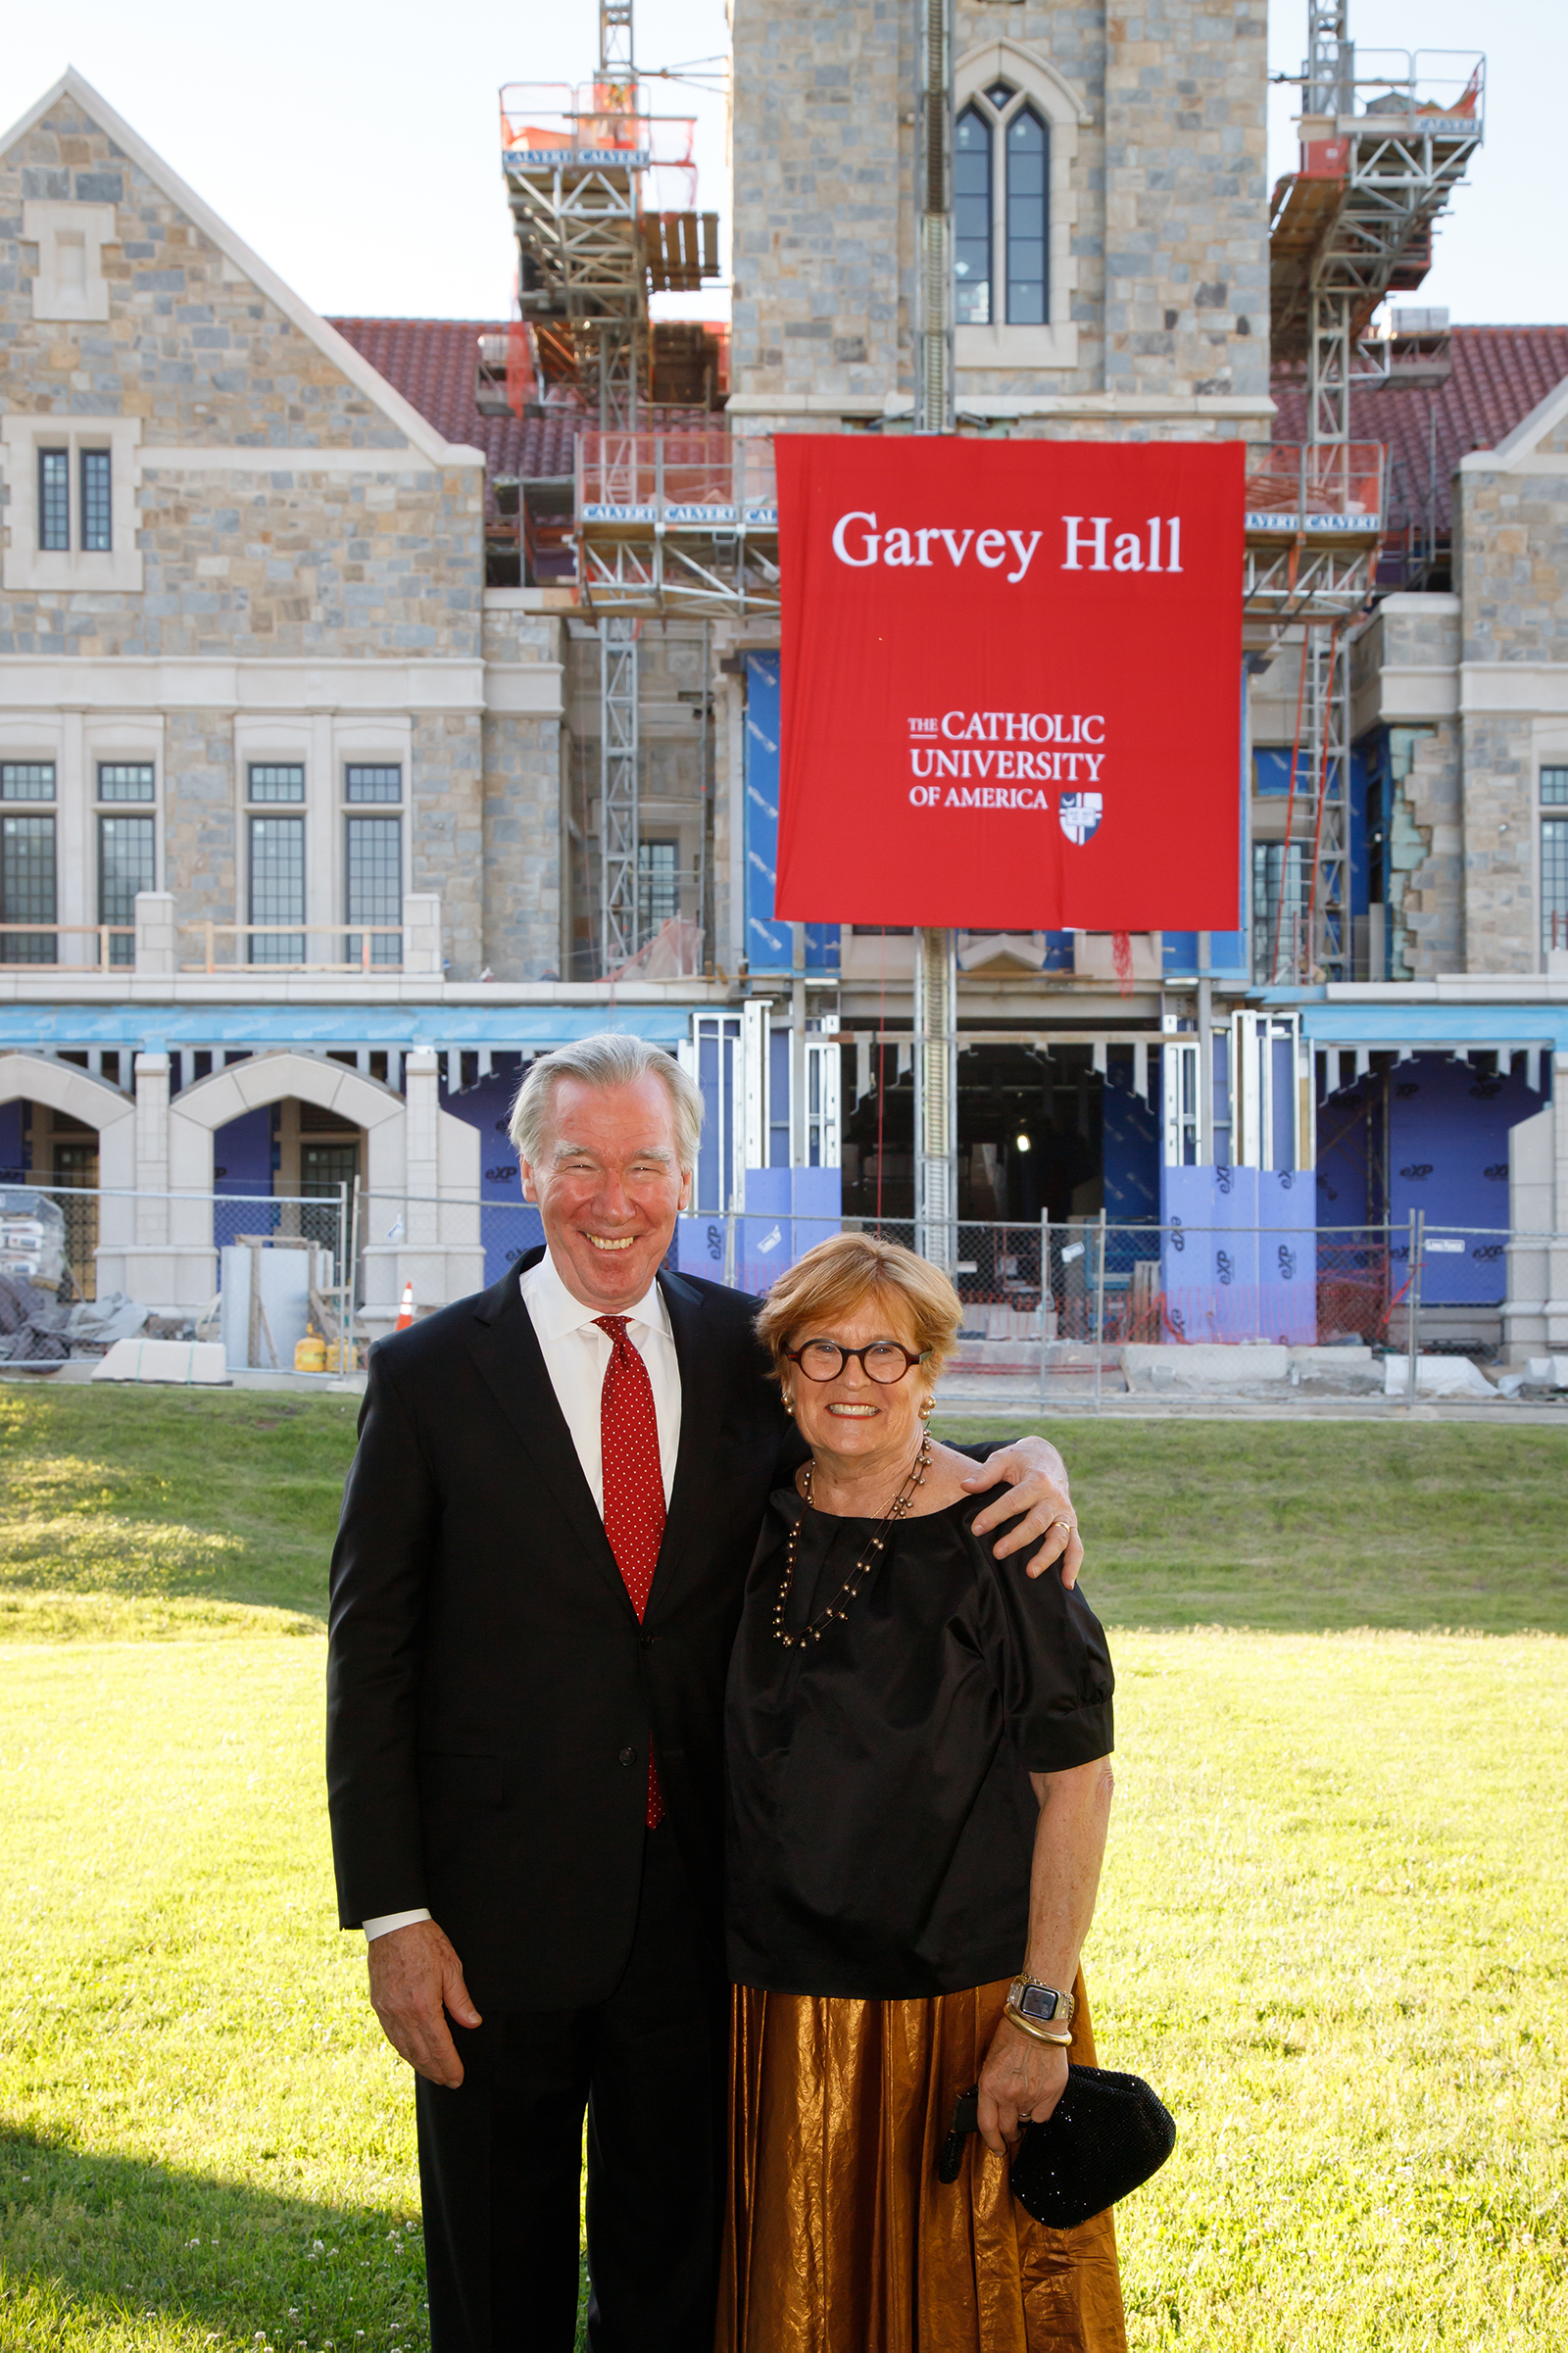 John and Jeanne Garvey with the Garvey Hall banner